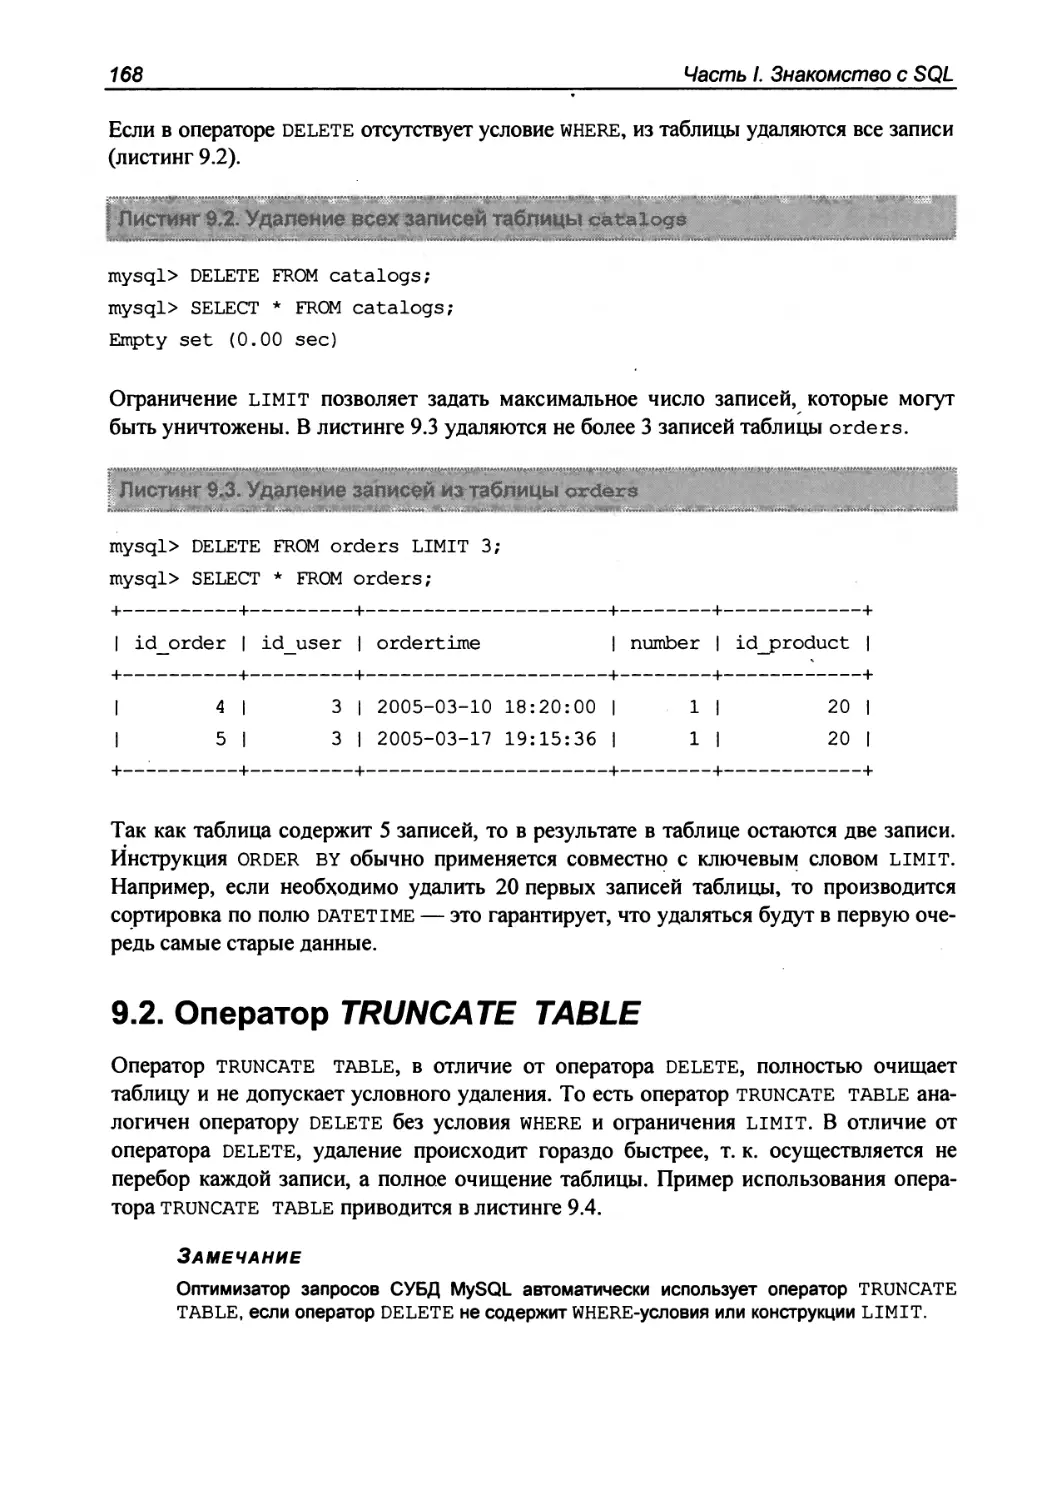 9.2. Оператор TRANCUTE TABLE